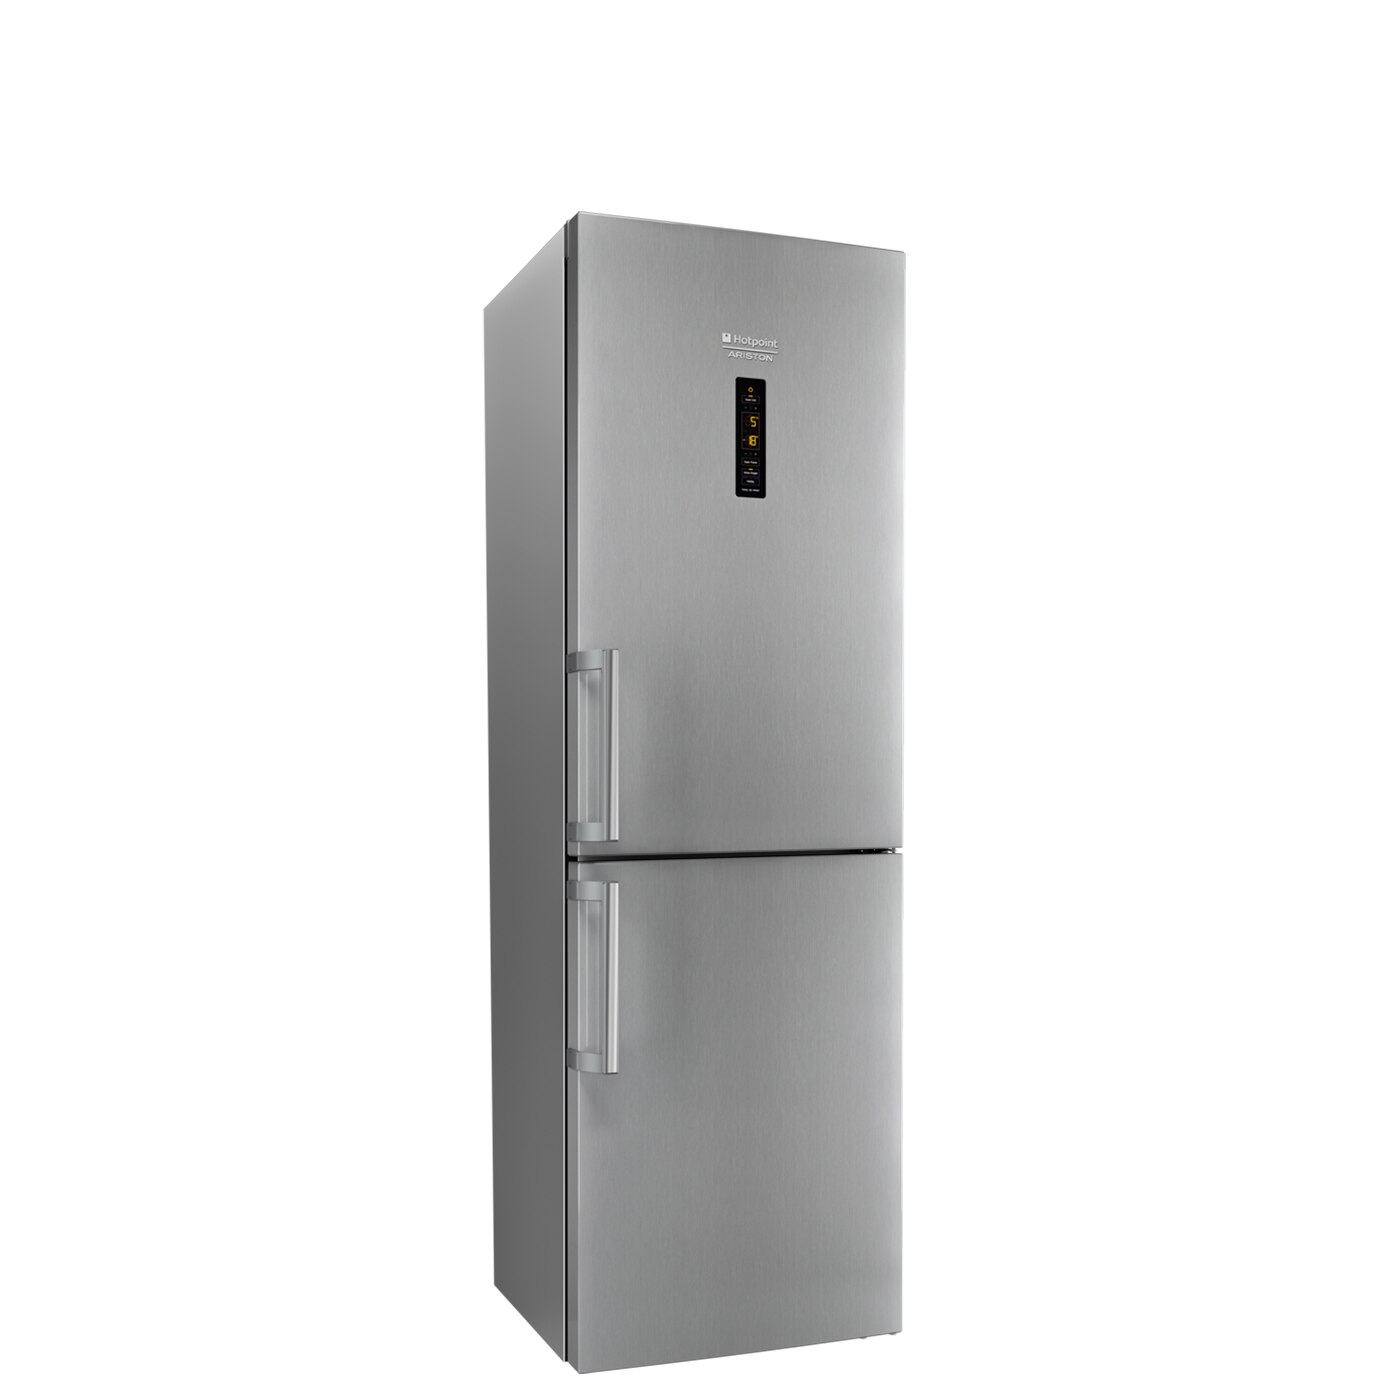 Хладилник Hotpoint XH9 T2Z XOZH с обем от 369 л.